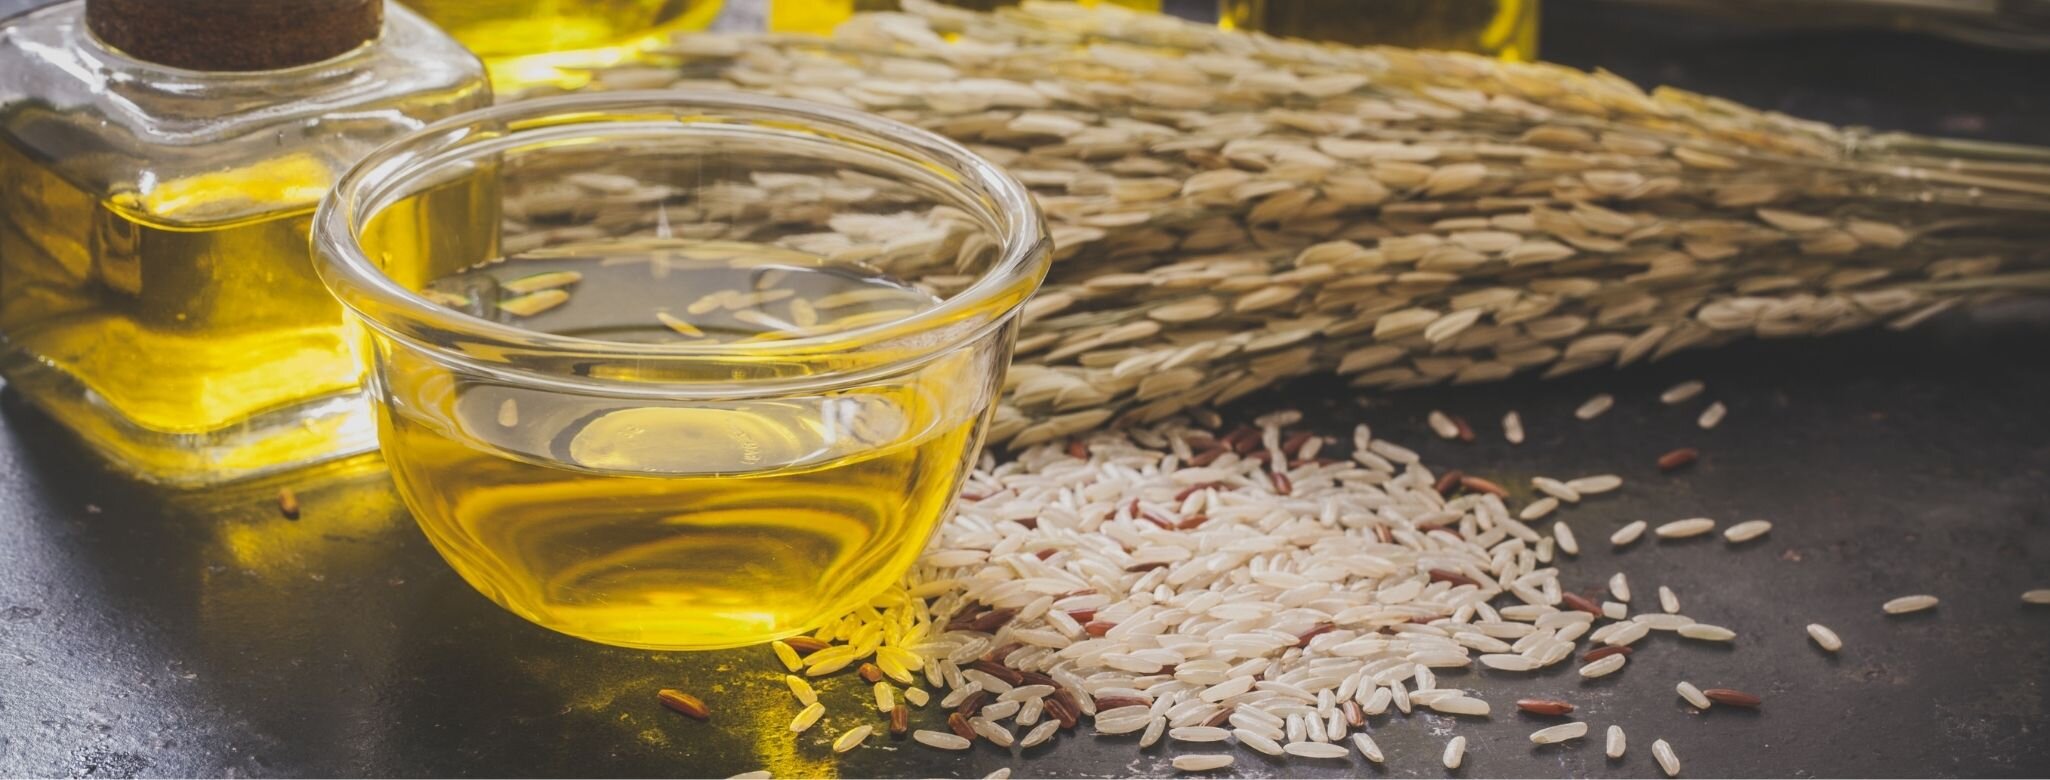 Rice Bran Oil: Deep-frying may lower cholesterol - Food - The